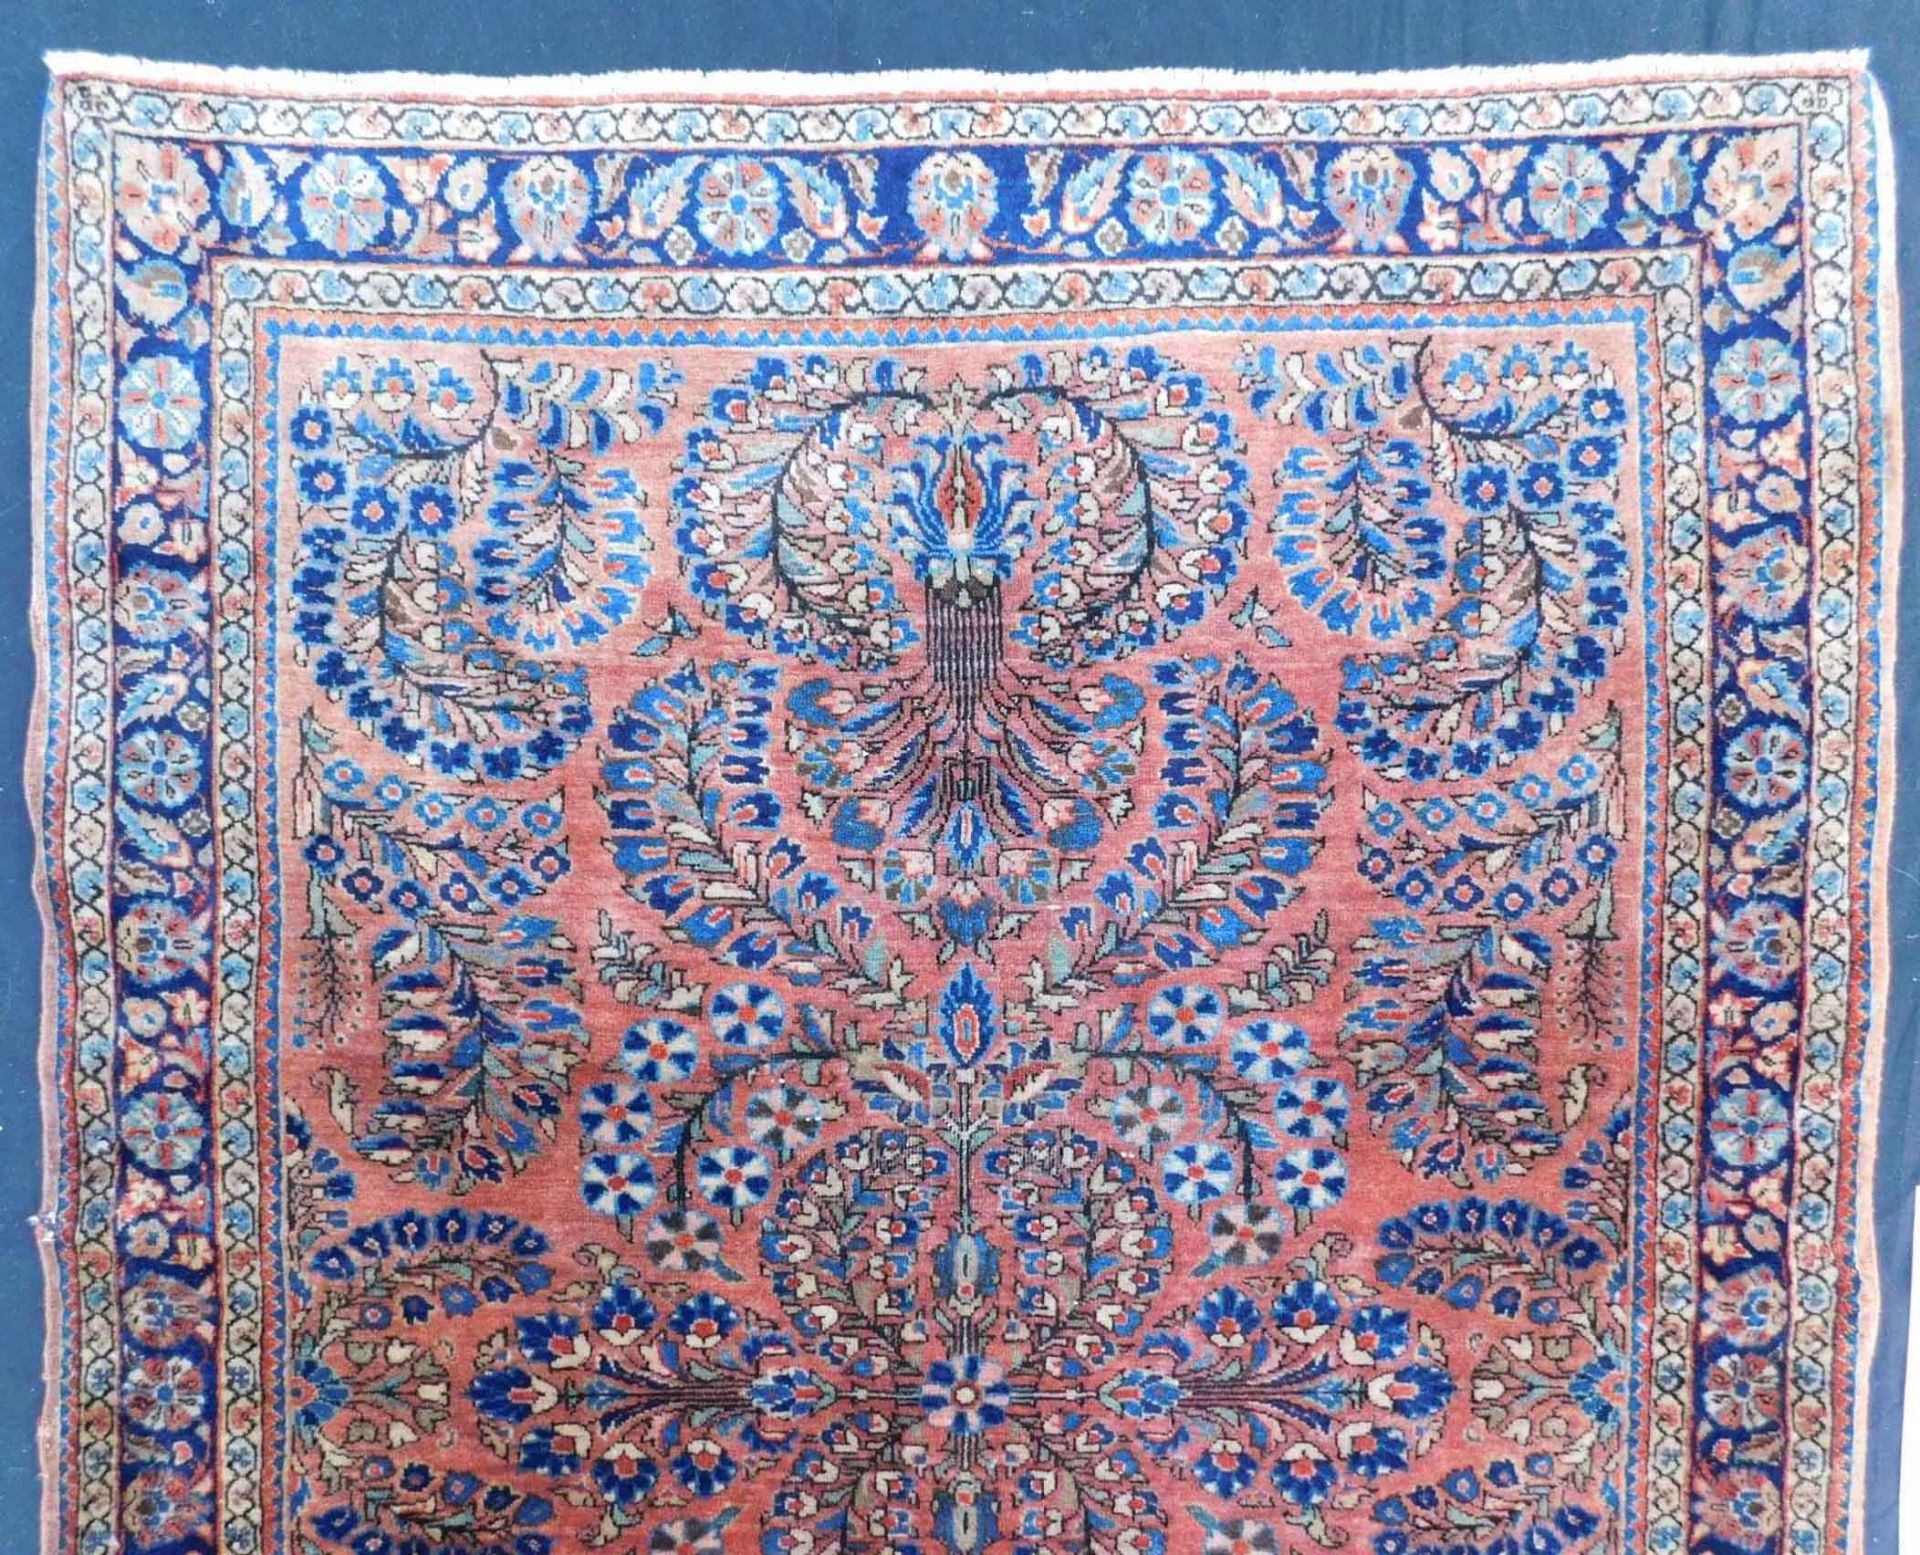 Saruk "American Saruk". Persian carpet. Iran, about 90 -110 years old. - Image 3 of 6